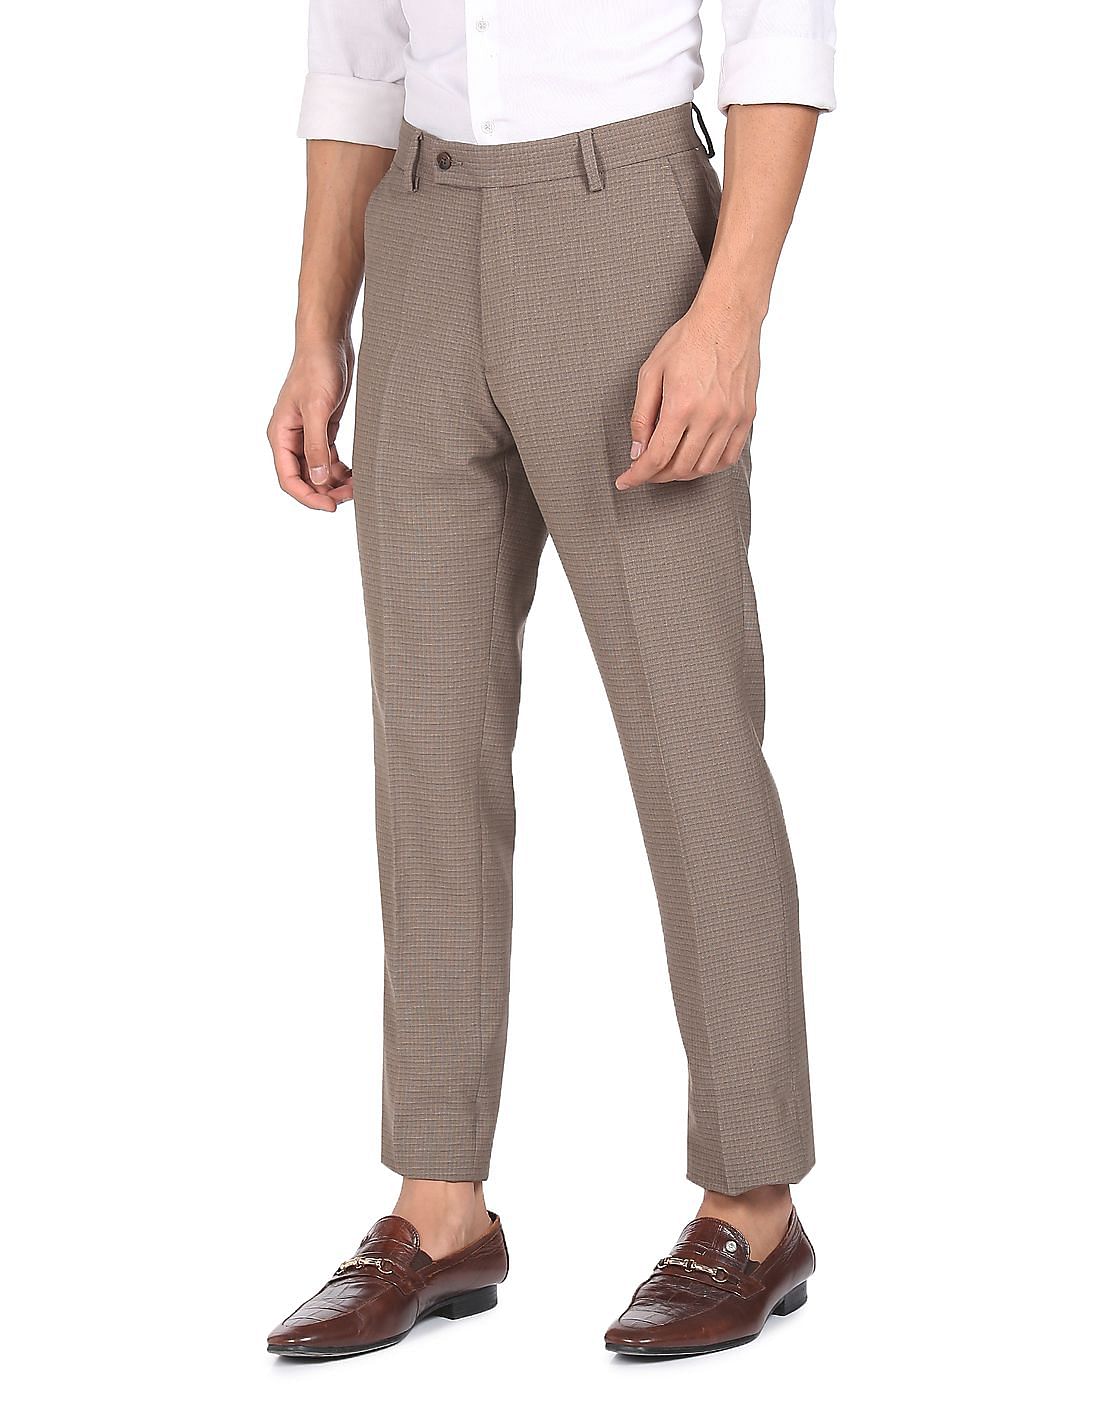 Iridium Gray Textured Premium WoolBlend Pant For Men